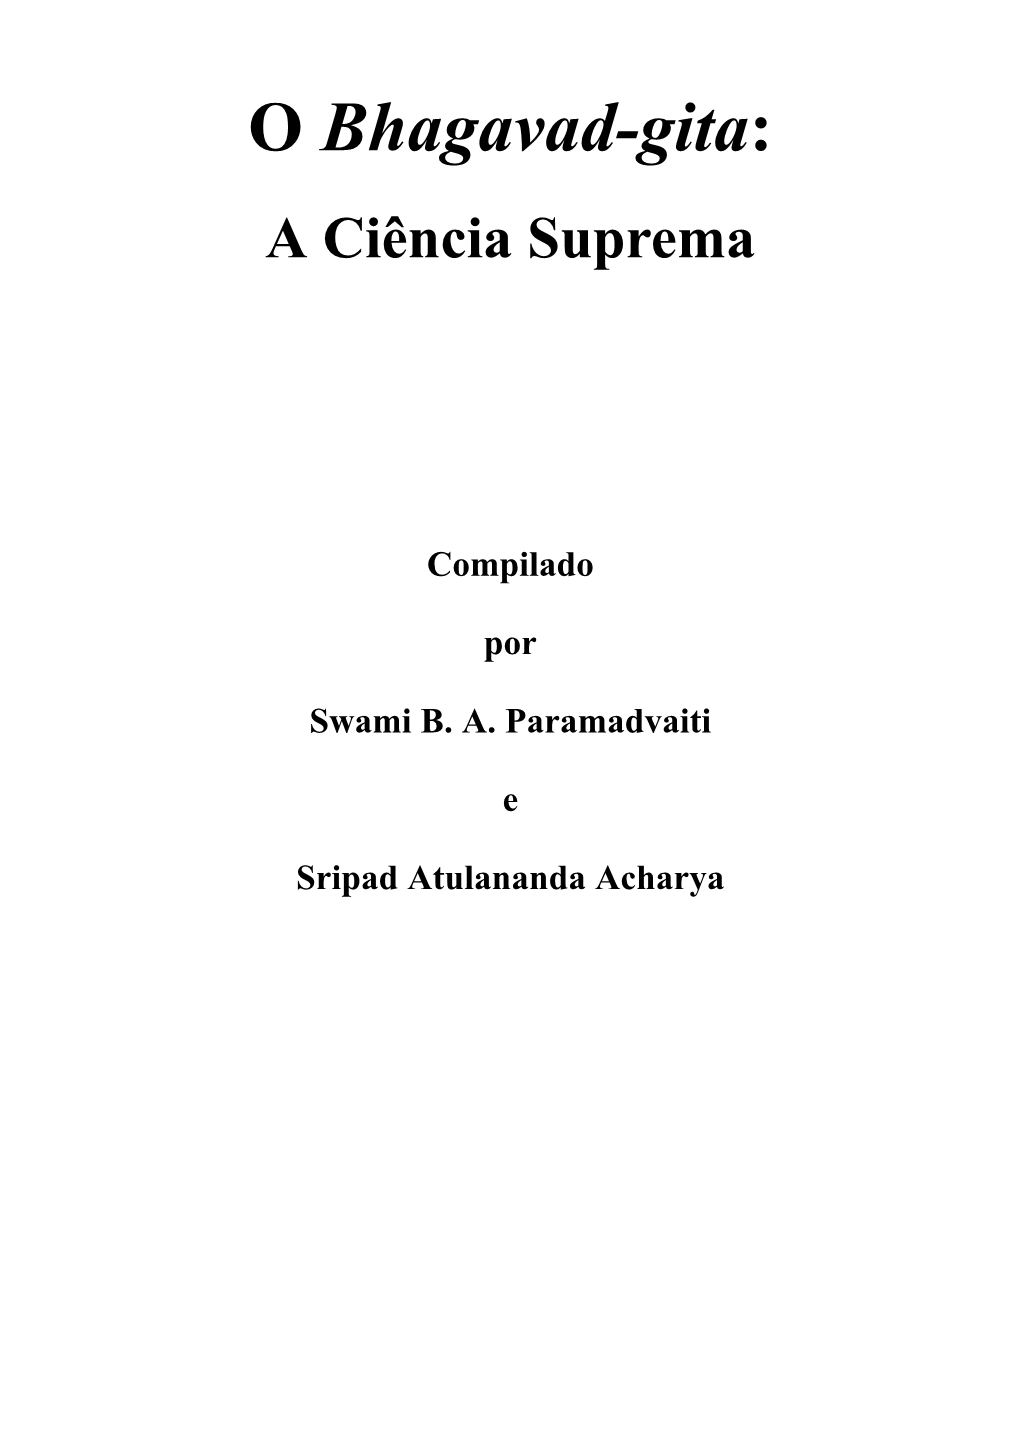 Bhagavad-Gita, a Ciência Suprema